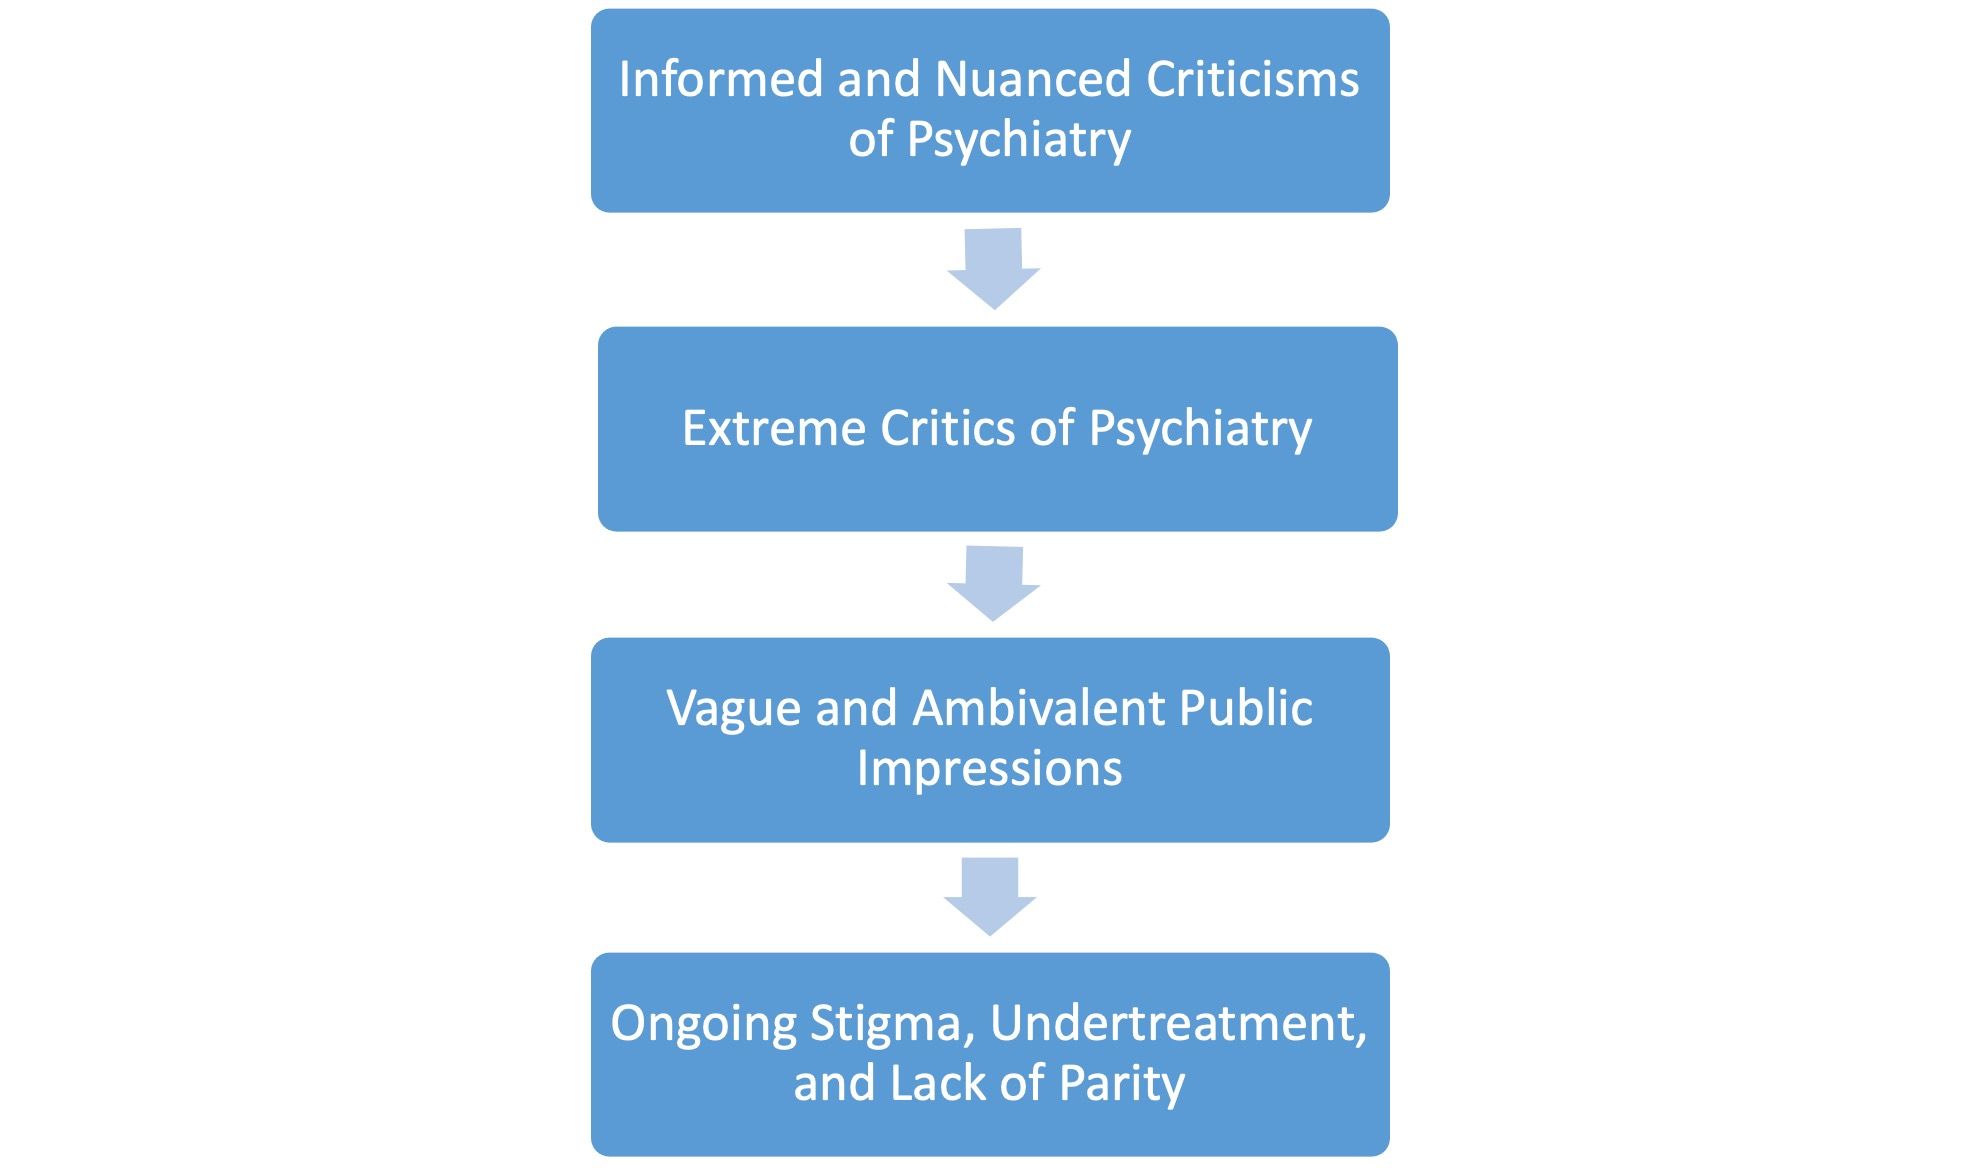 Table. Information Flow in Public Perception of Psychiatry